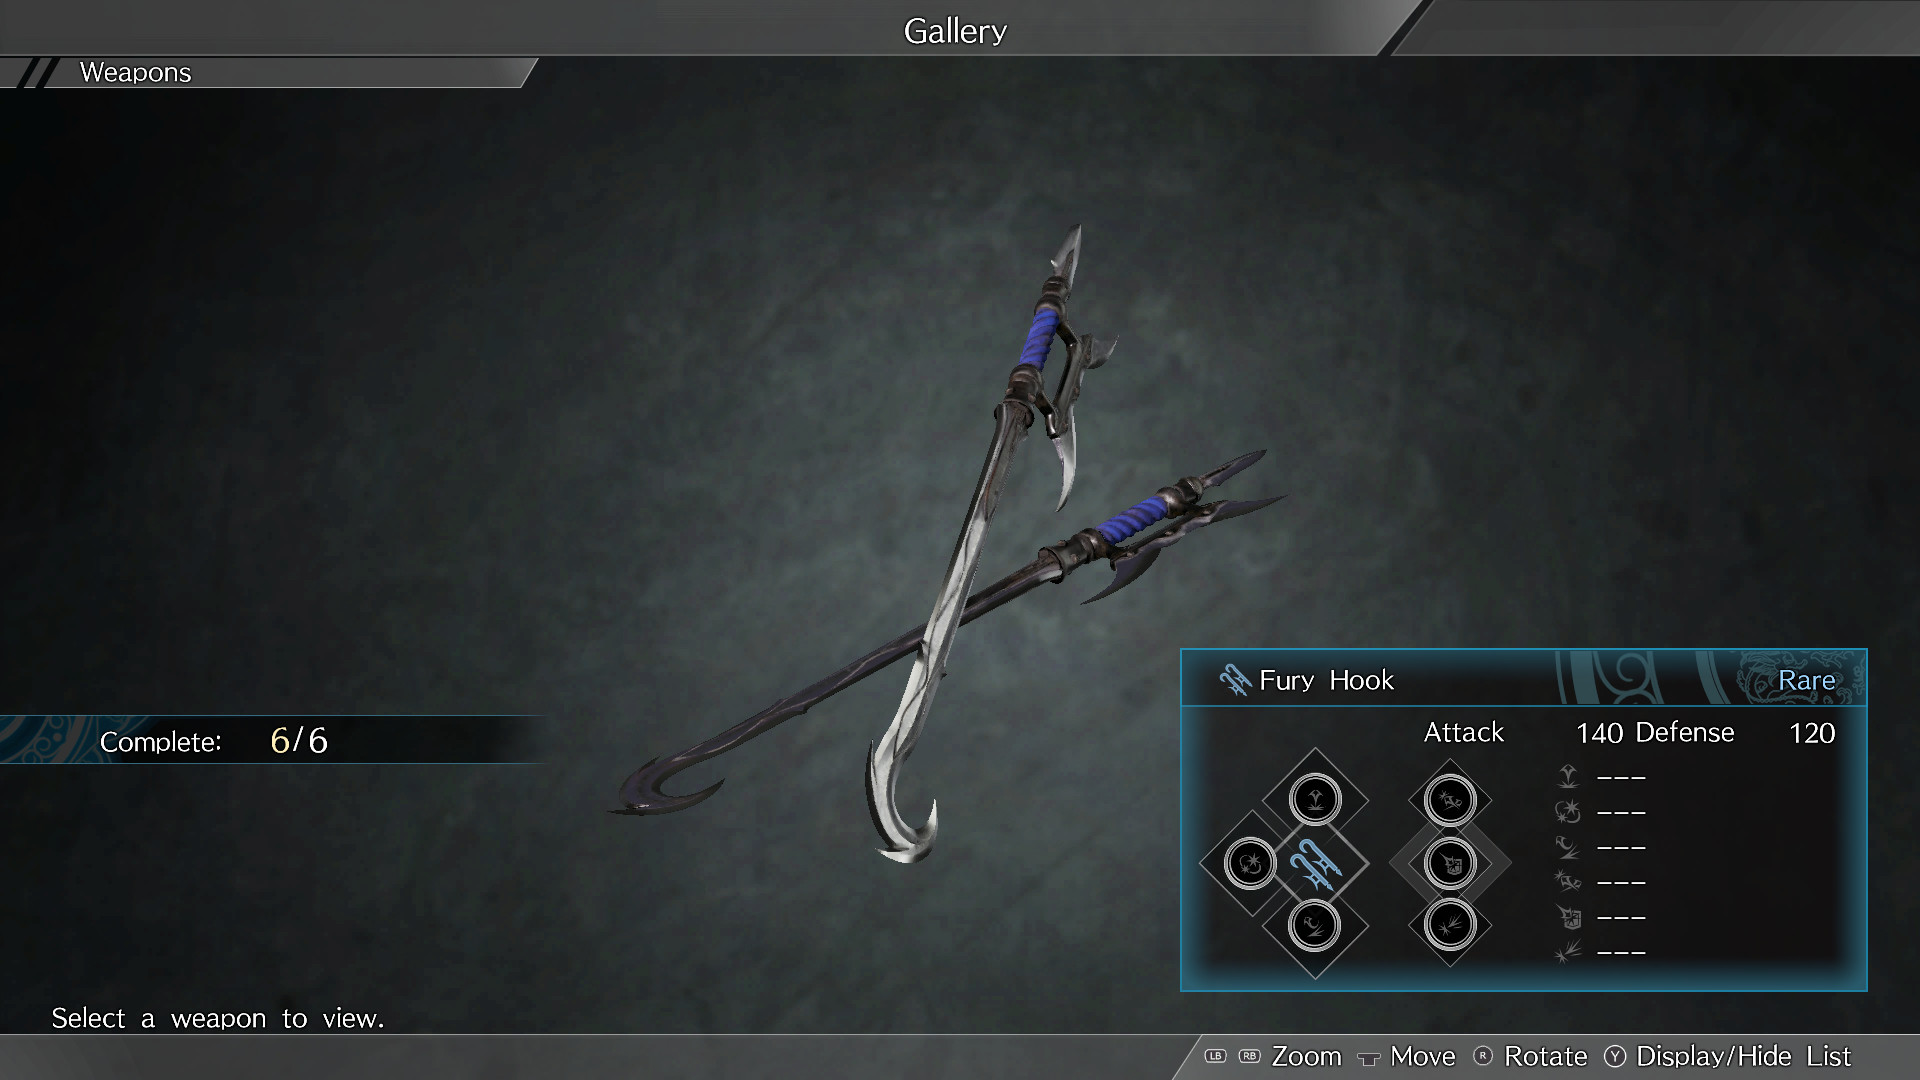 DYNASTY WARRIORS 9: Additional Weapon "Dual Hookblades" / 追加武器「双鉤」 Featured Screenshot #1